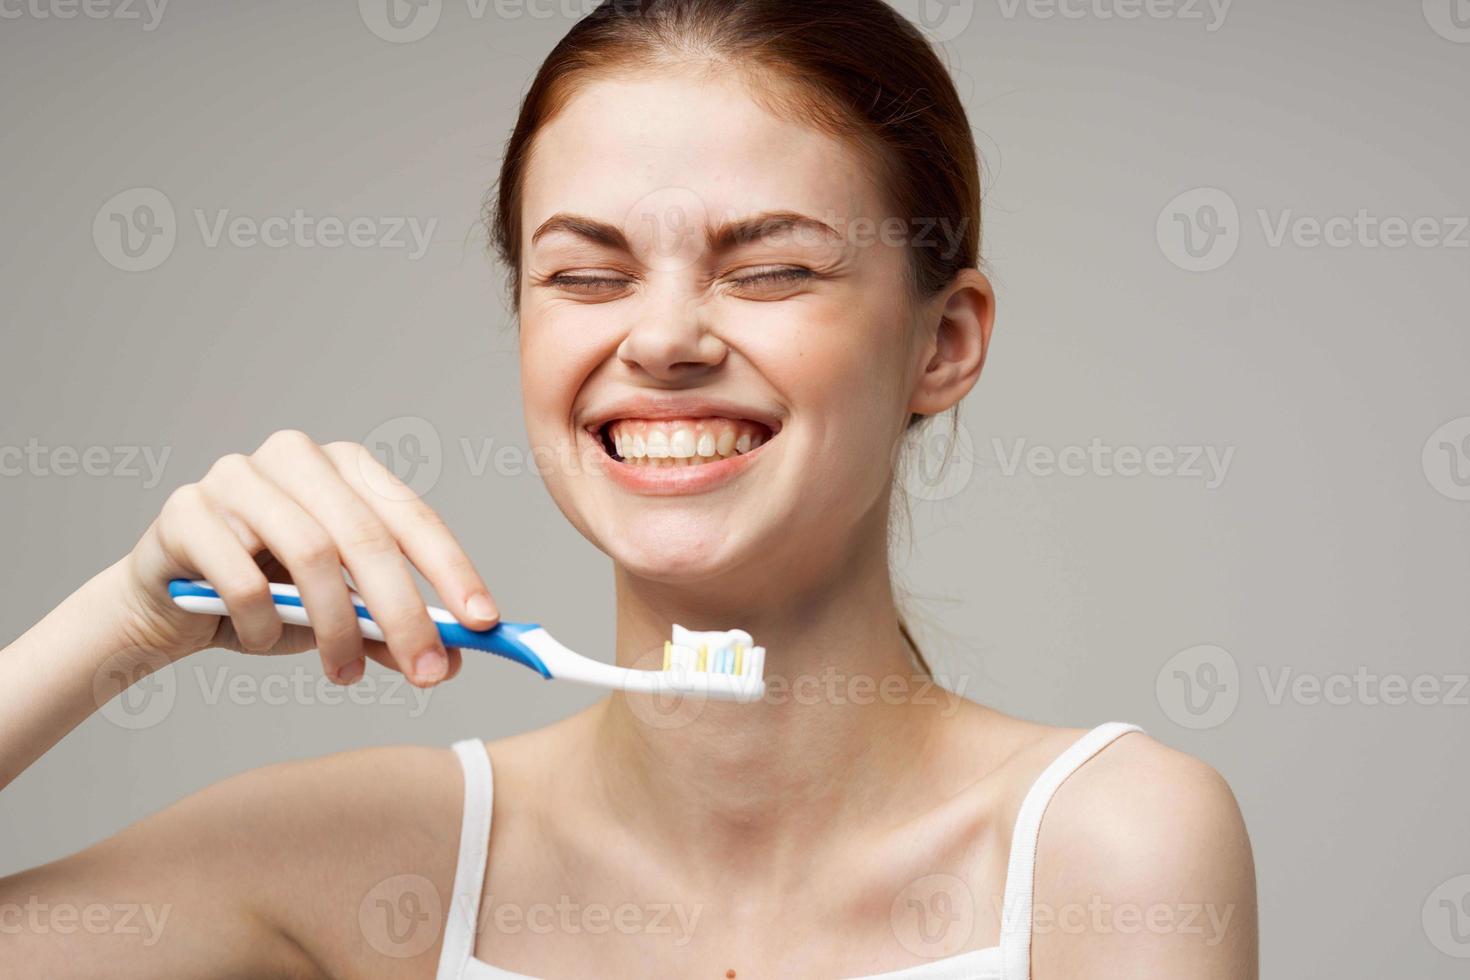 vrolijk vrouw tandenborstel hygiëne tandpasta foto